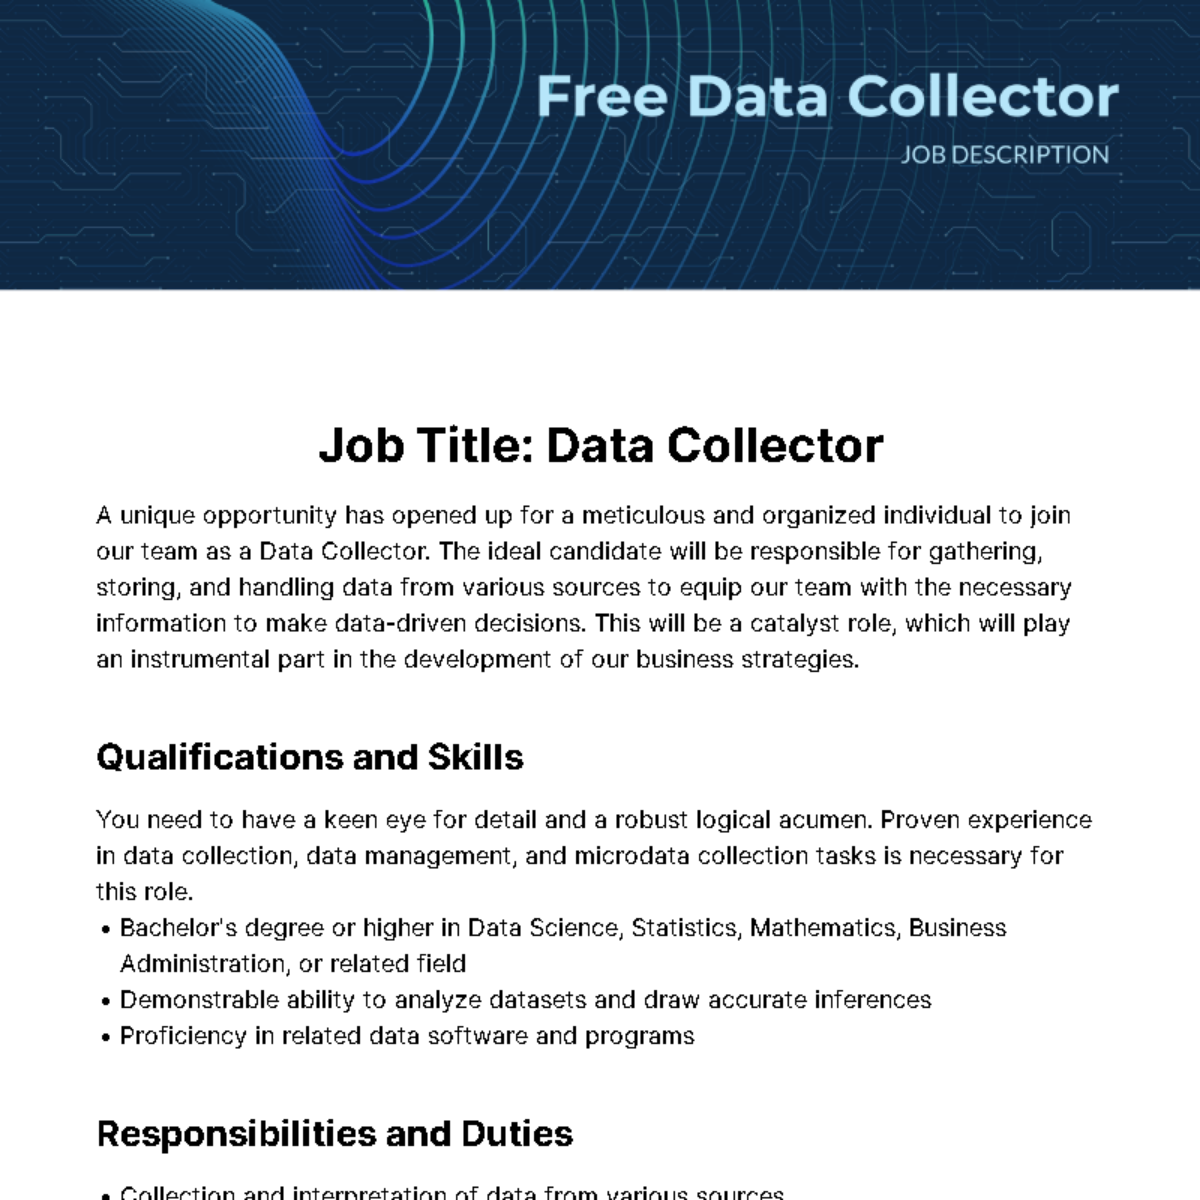 Free Data Collector Job Description Template